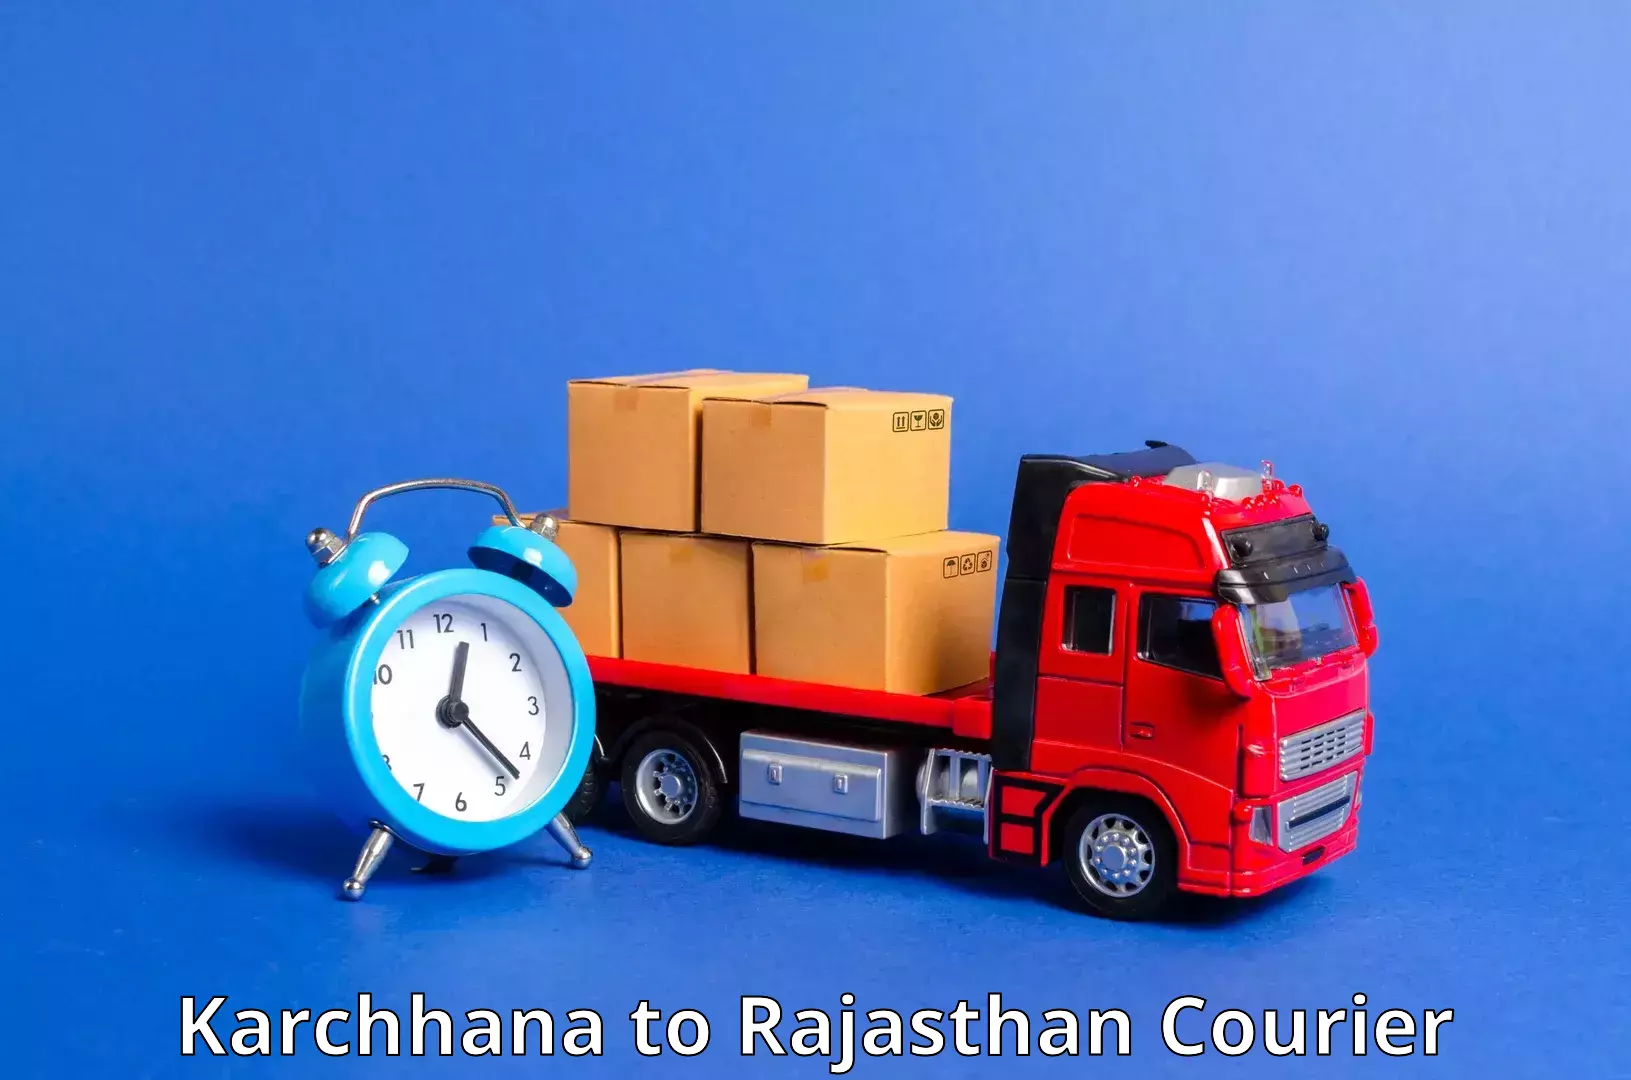 Advanced tracking systems in Karchhana to Sri Ganganagar